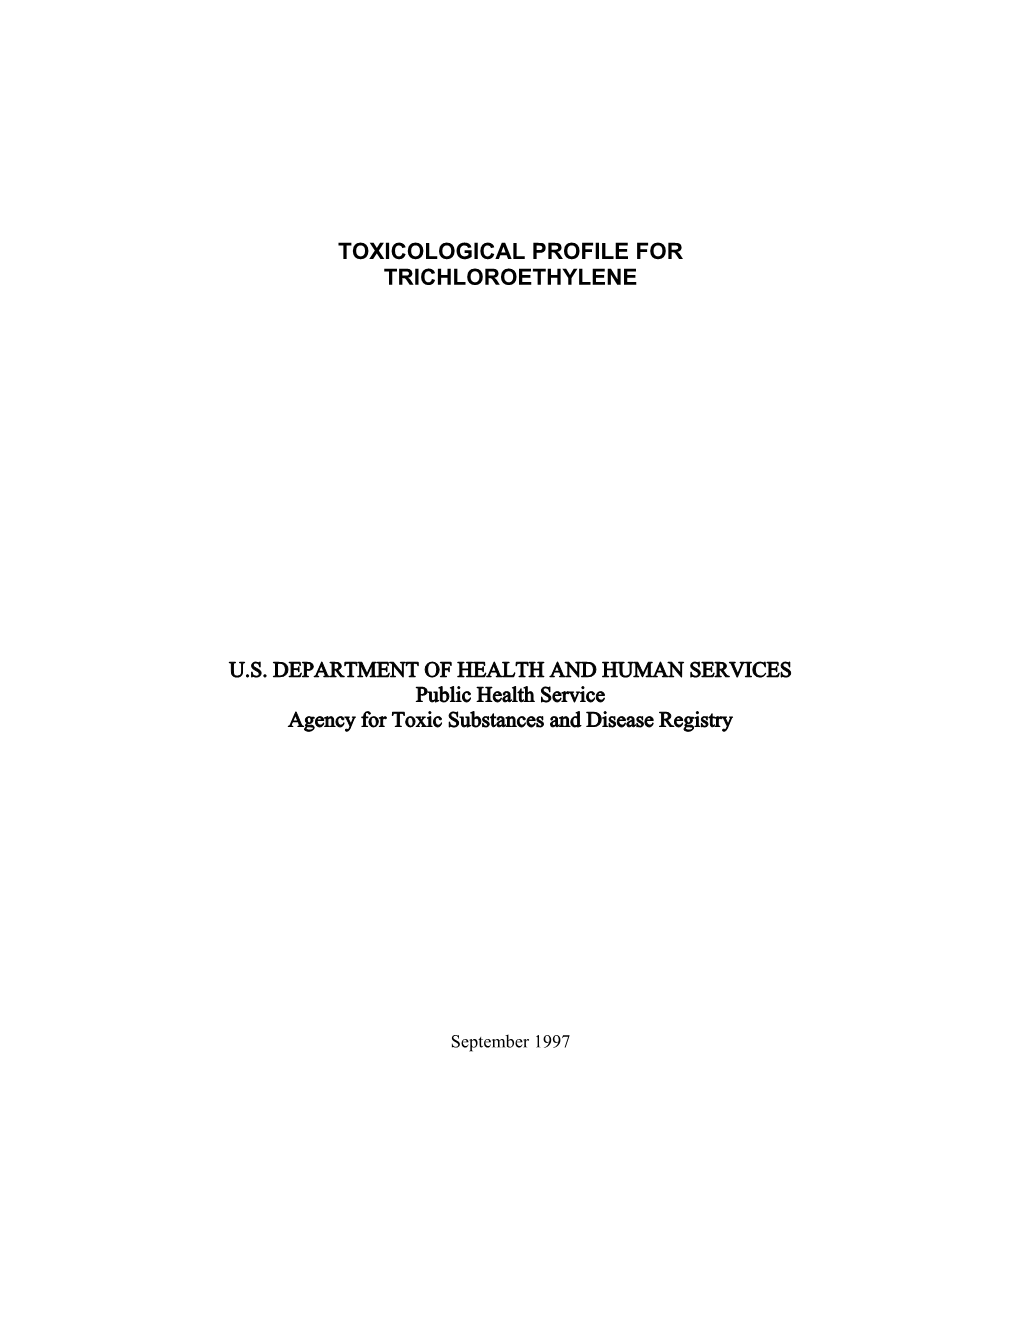 Toxicological Profile for Trichloroethylene